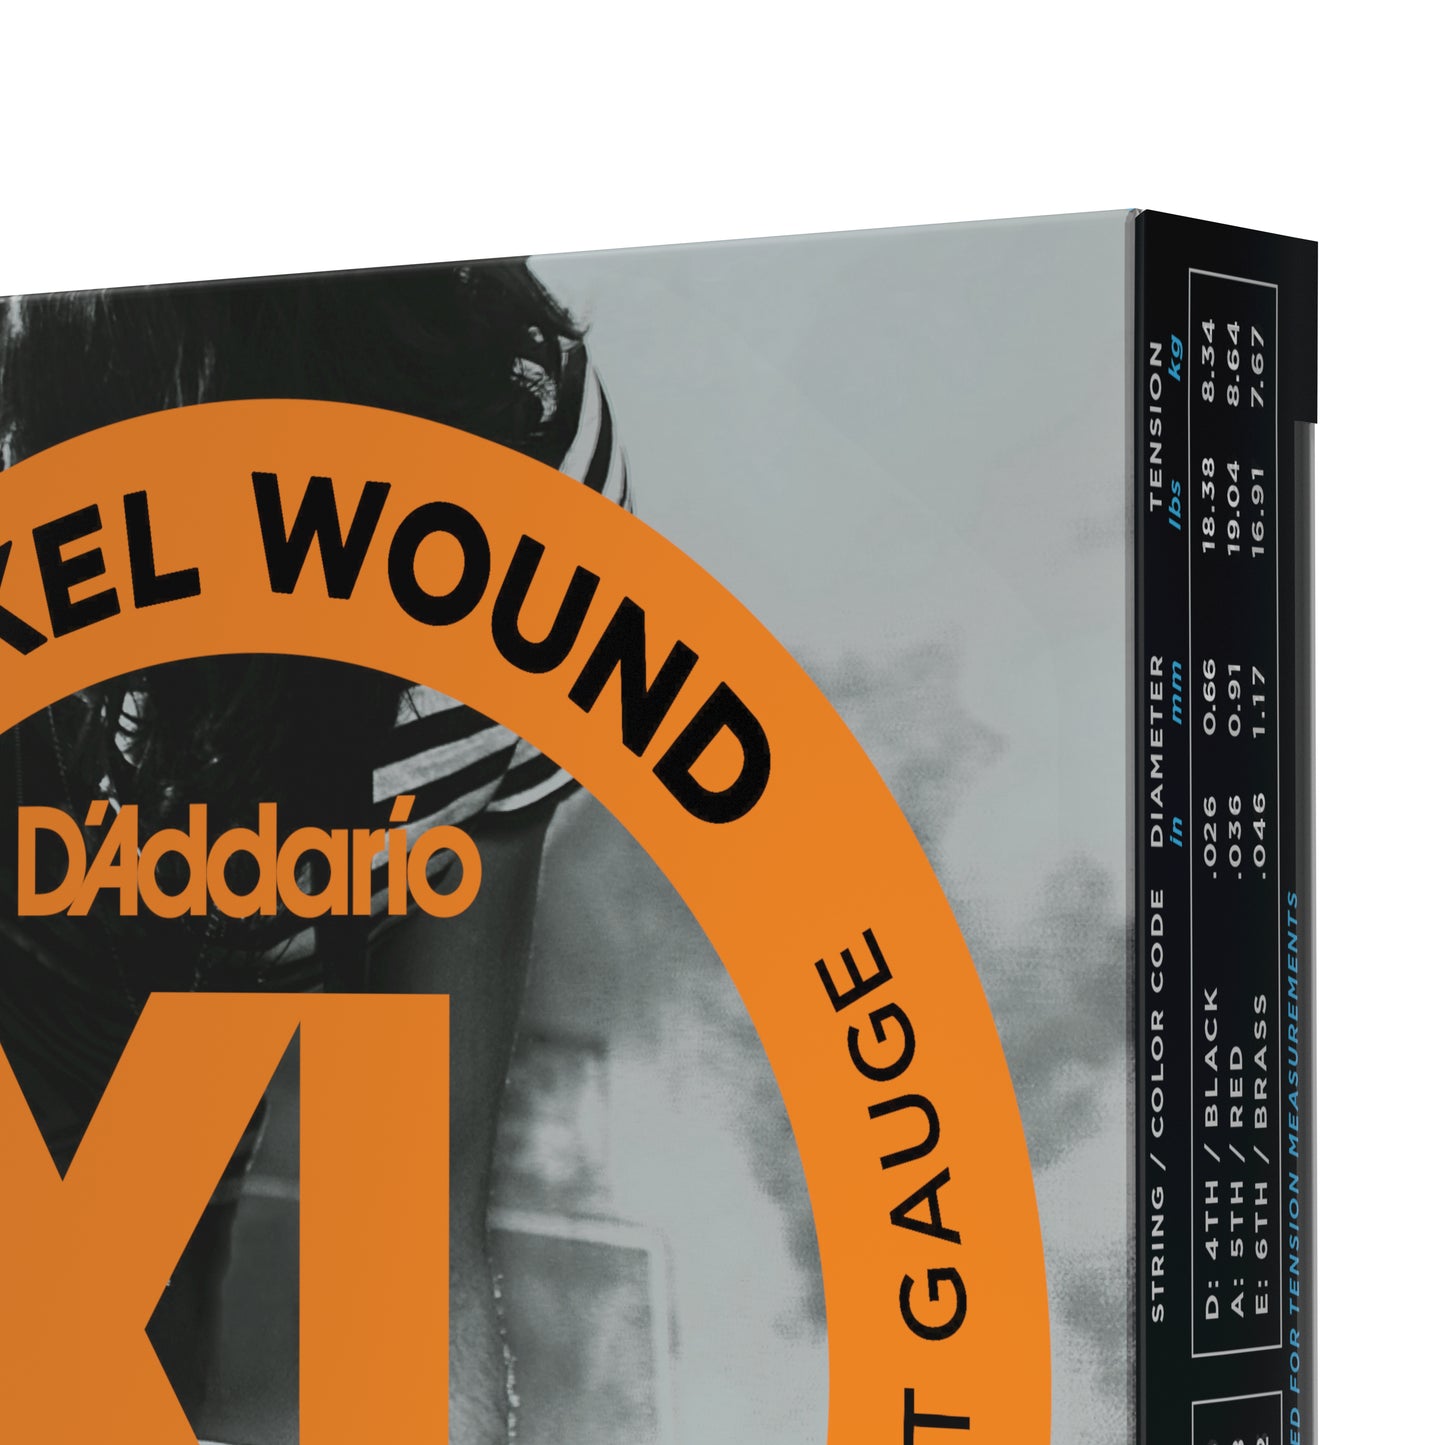 D'Addario EXL110-3D Nickel Wound Electric Guitar Strings, Regular Light, 10-46, 3 Sets